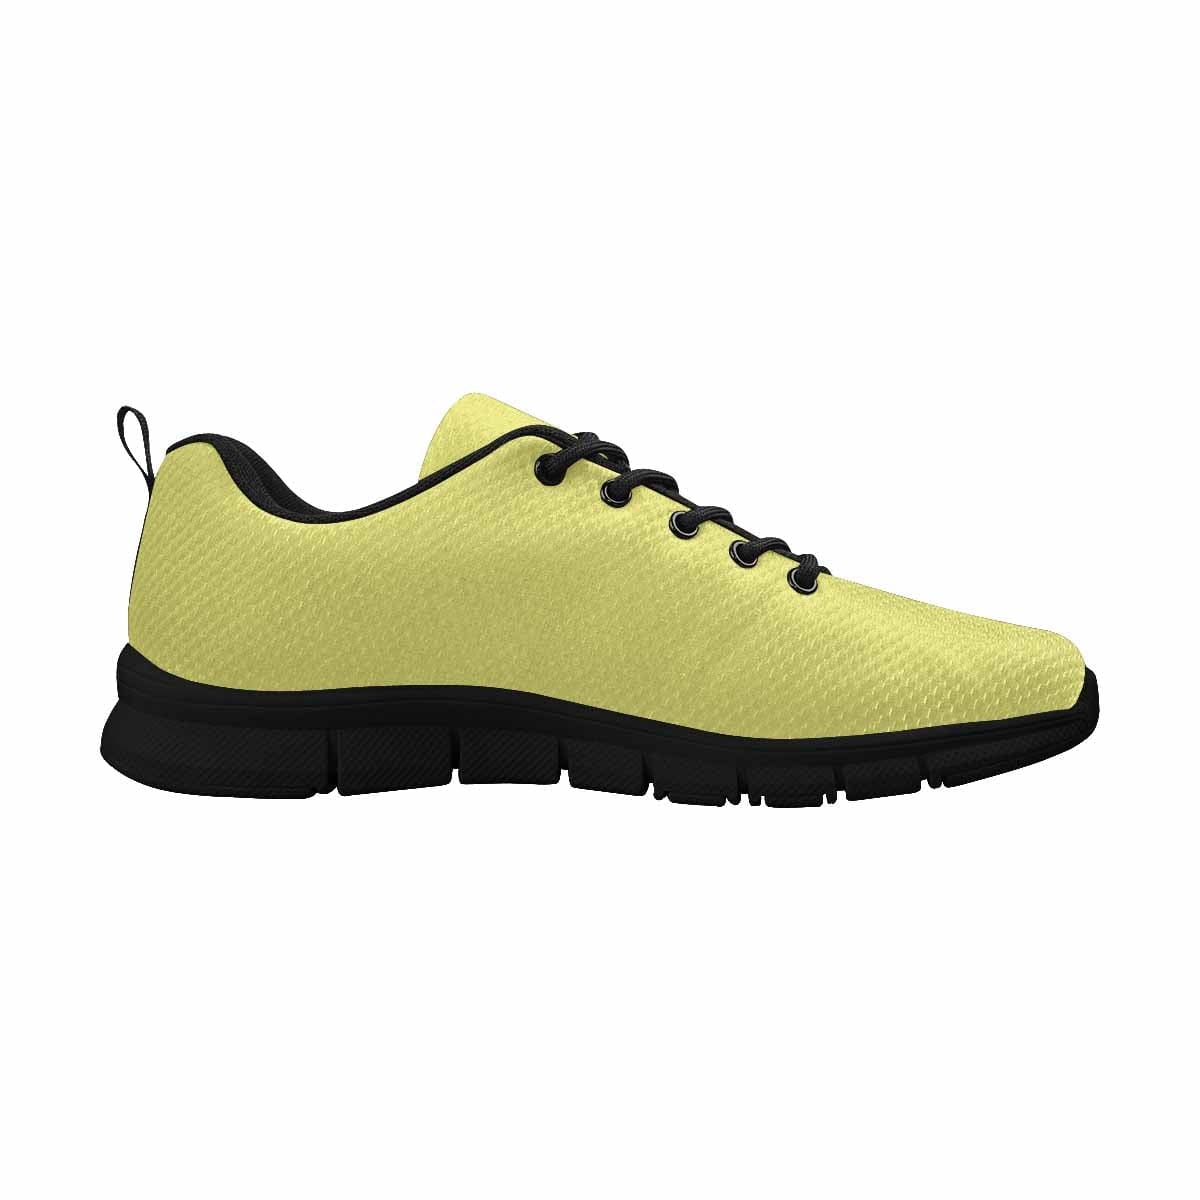 Sneakers For Women Honeysuckle Yellow - Womens | Sneakers | Running